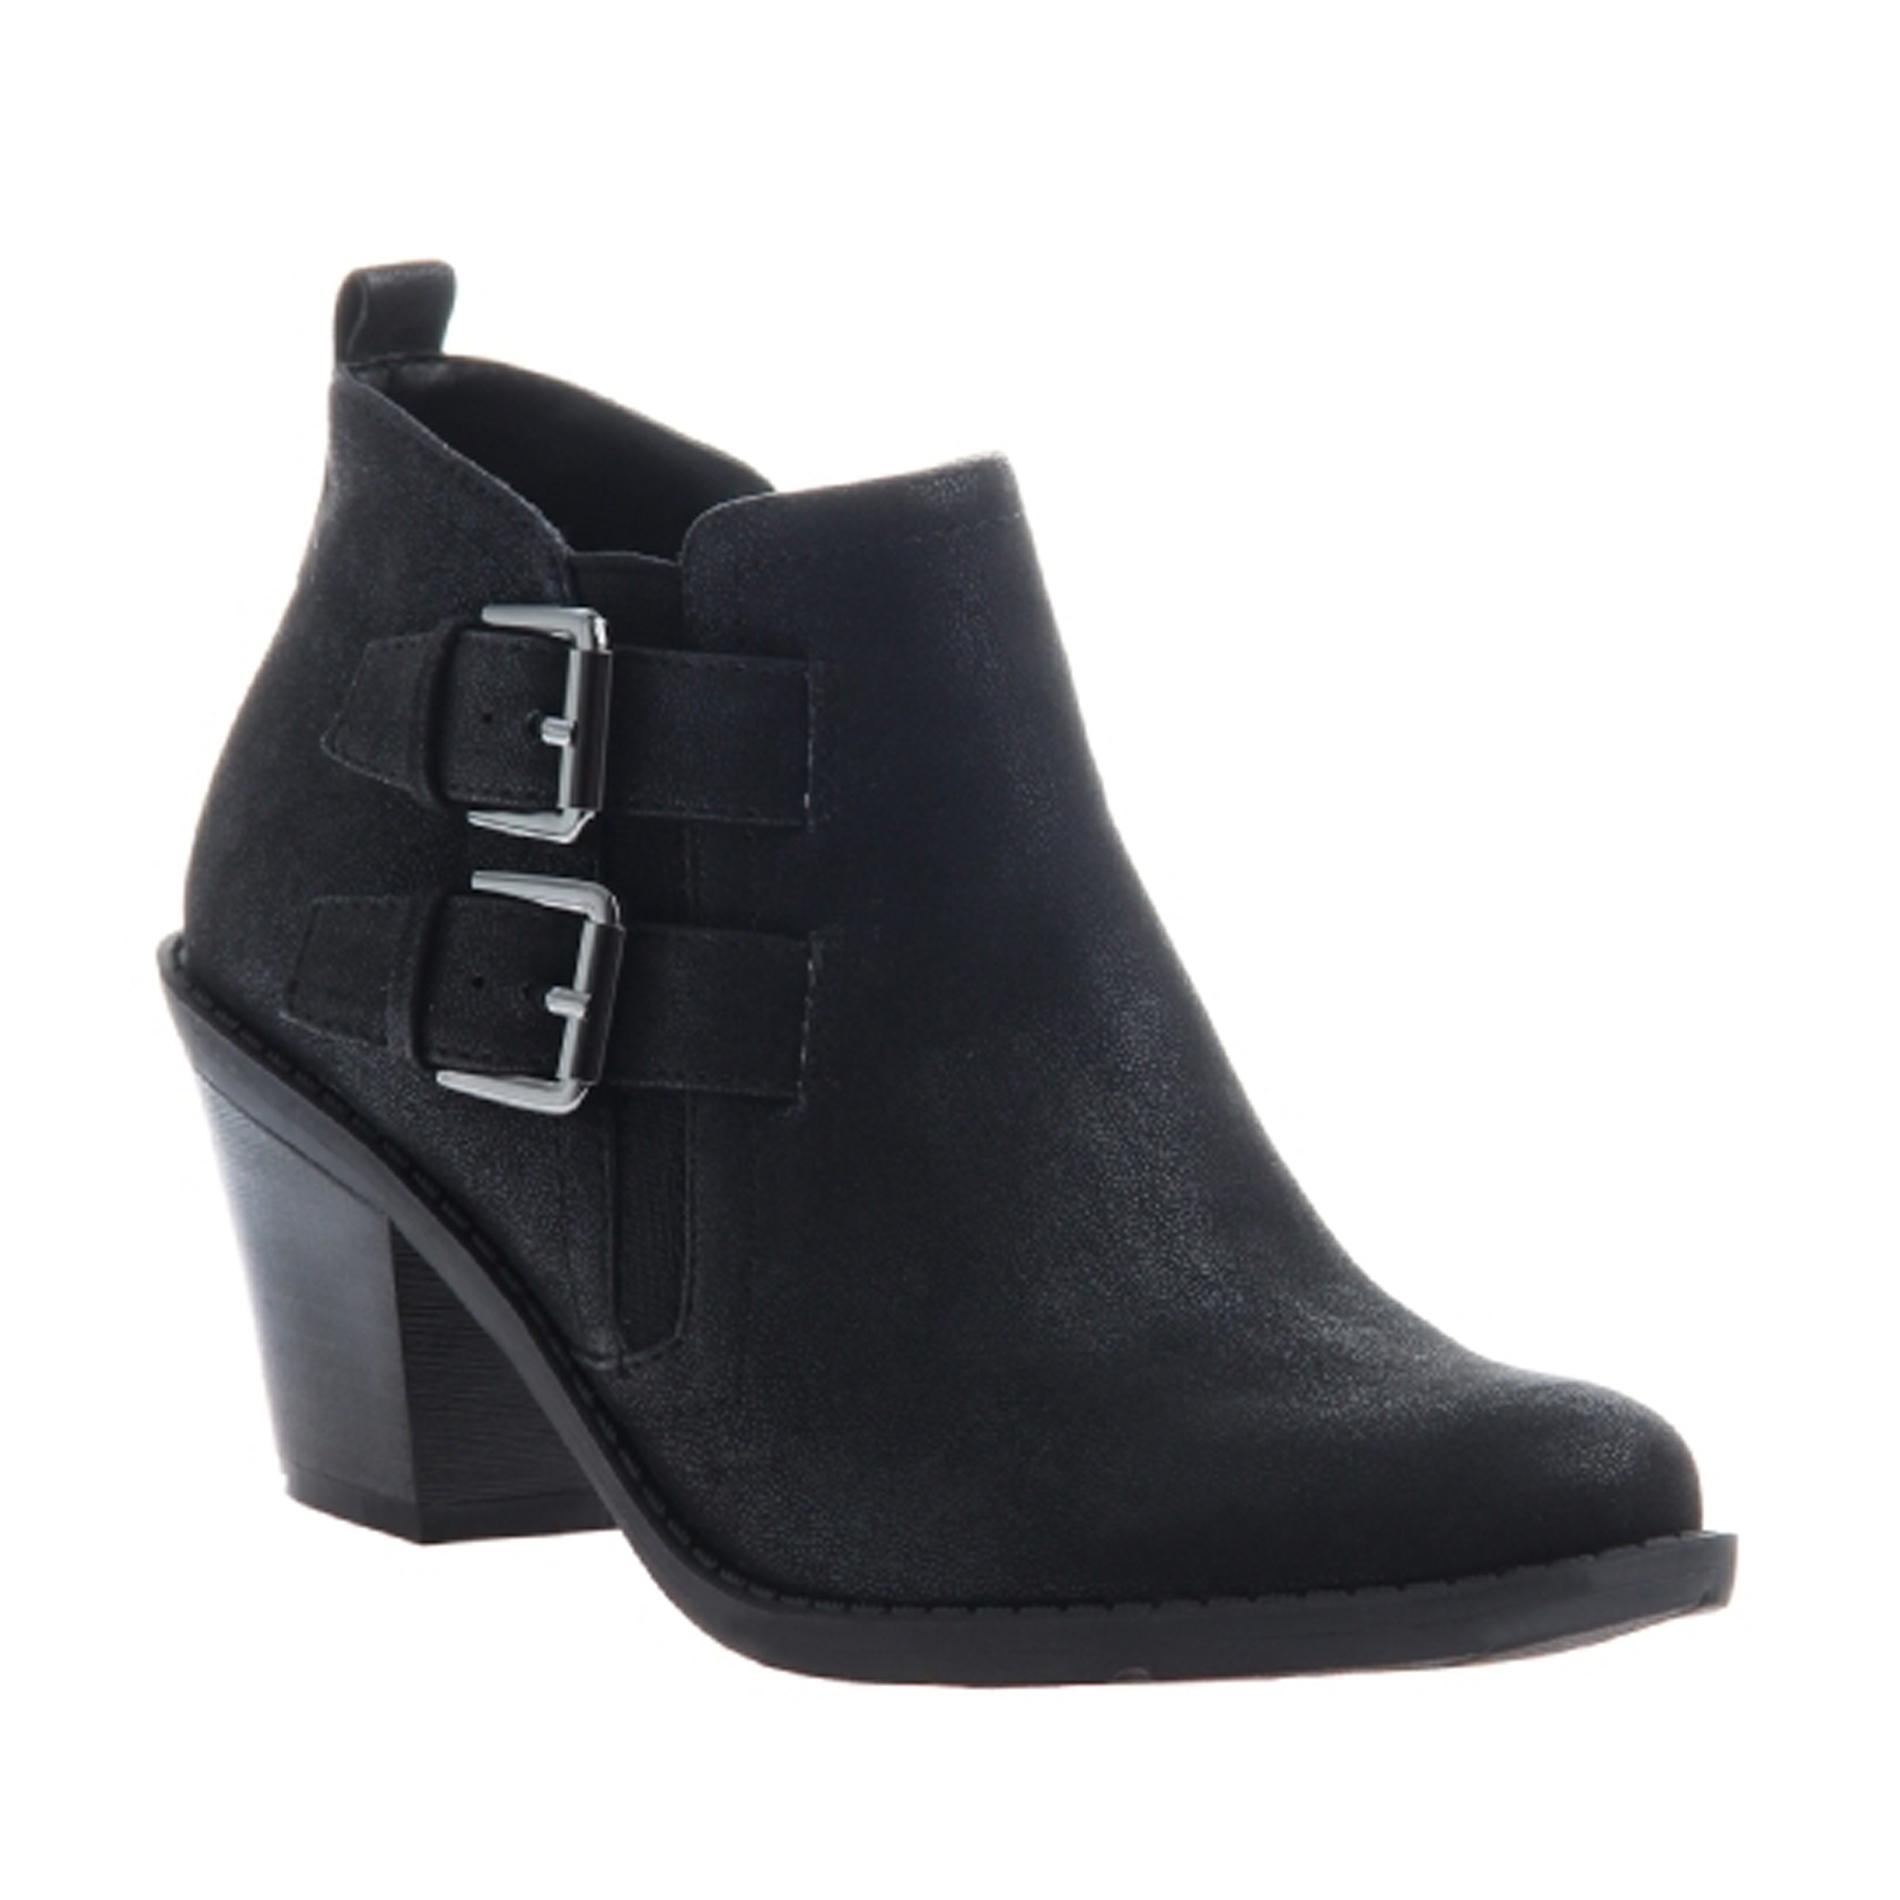 Madeline Women's Stylish Boot - Black